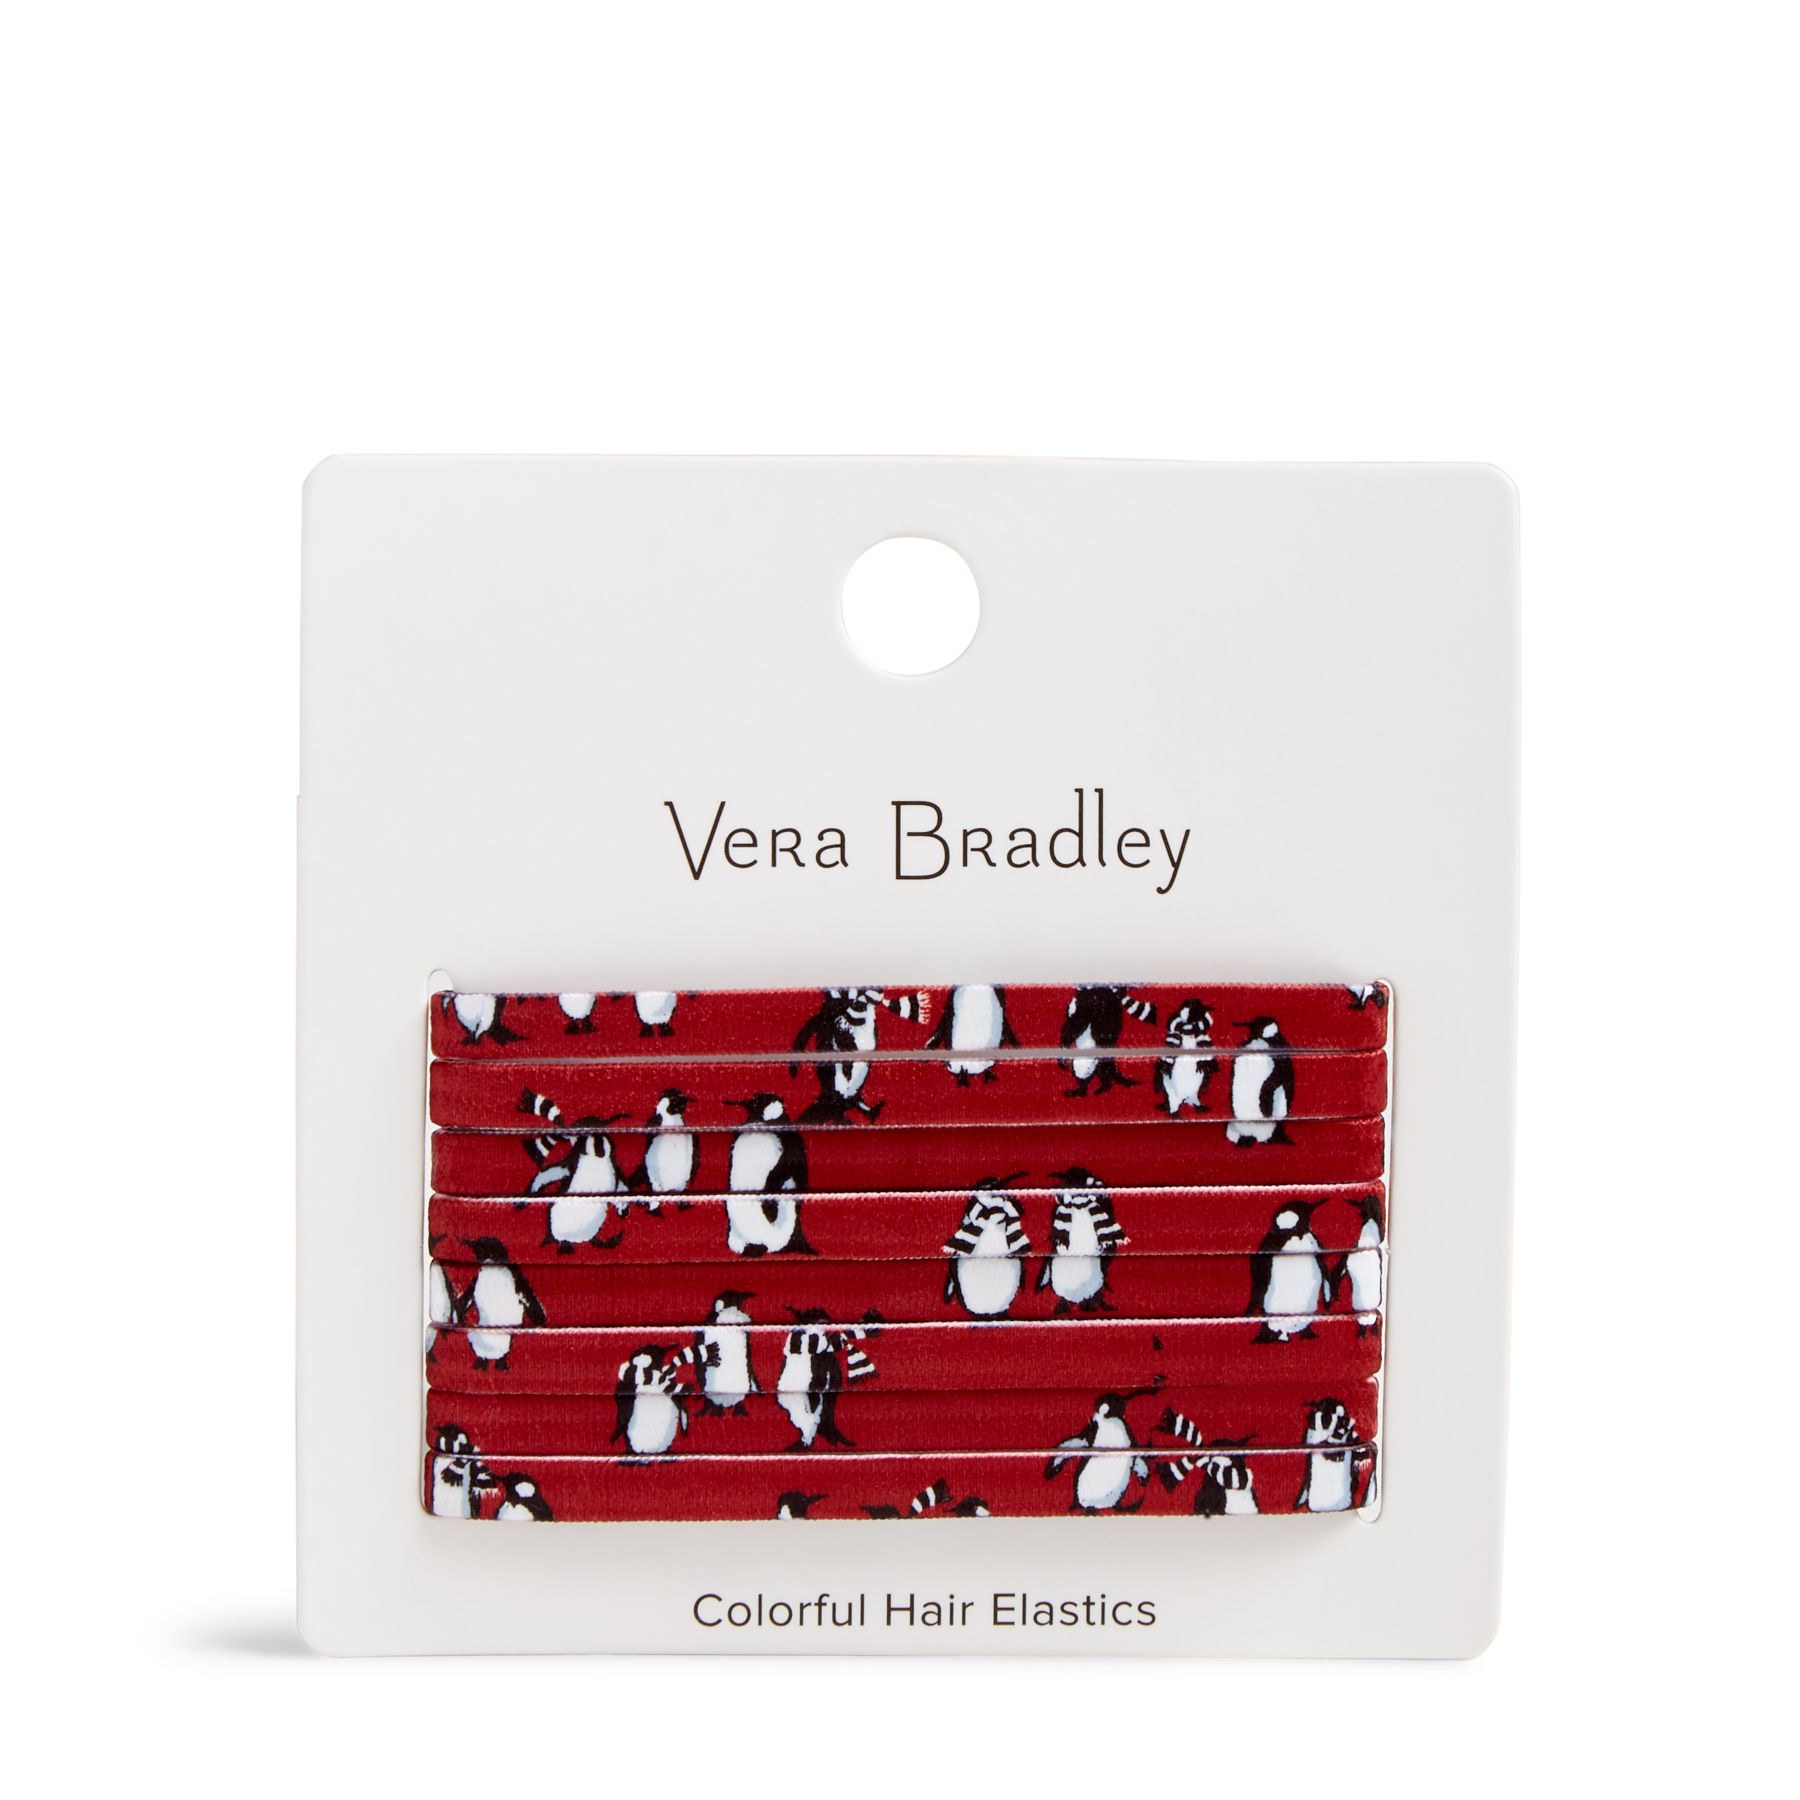 Vera Bradley Colorful Hair Elastics in Playful Penguins GrayHair Accessories